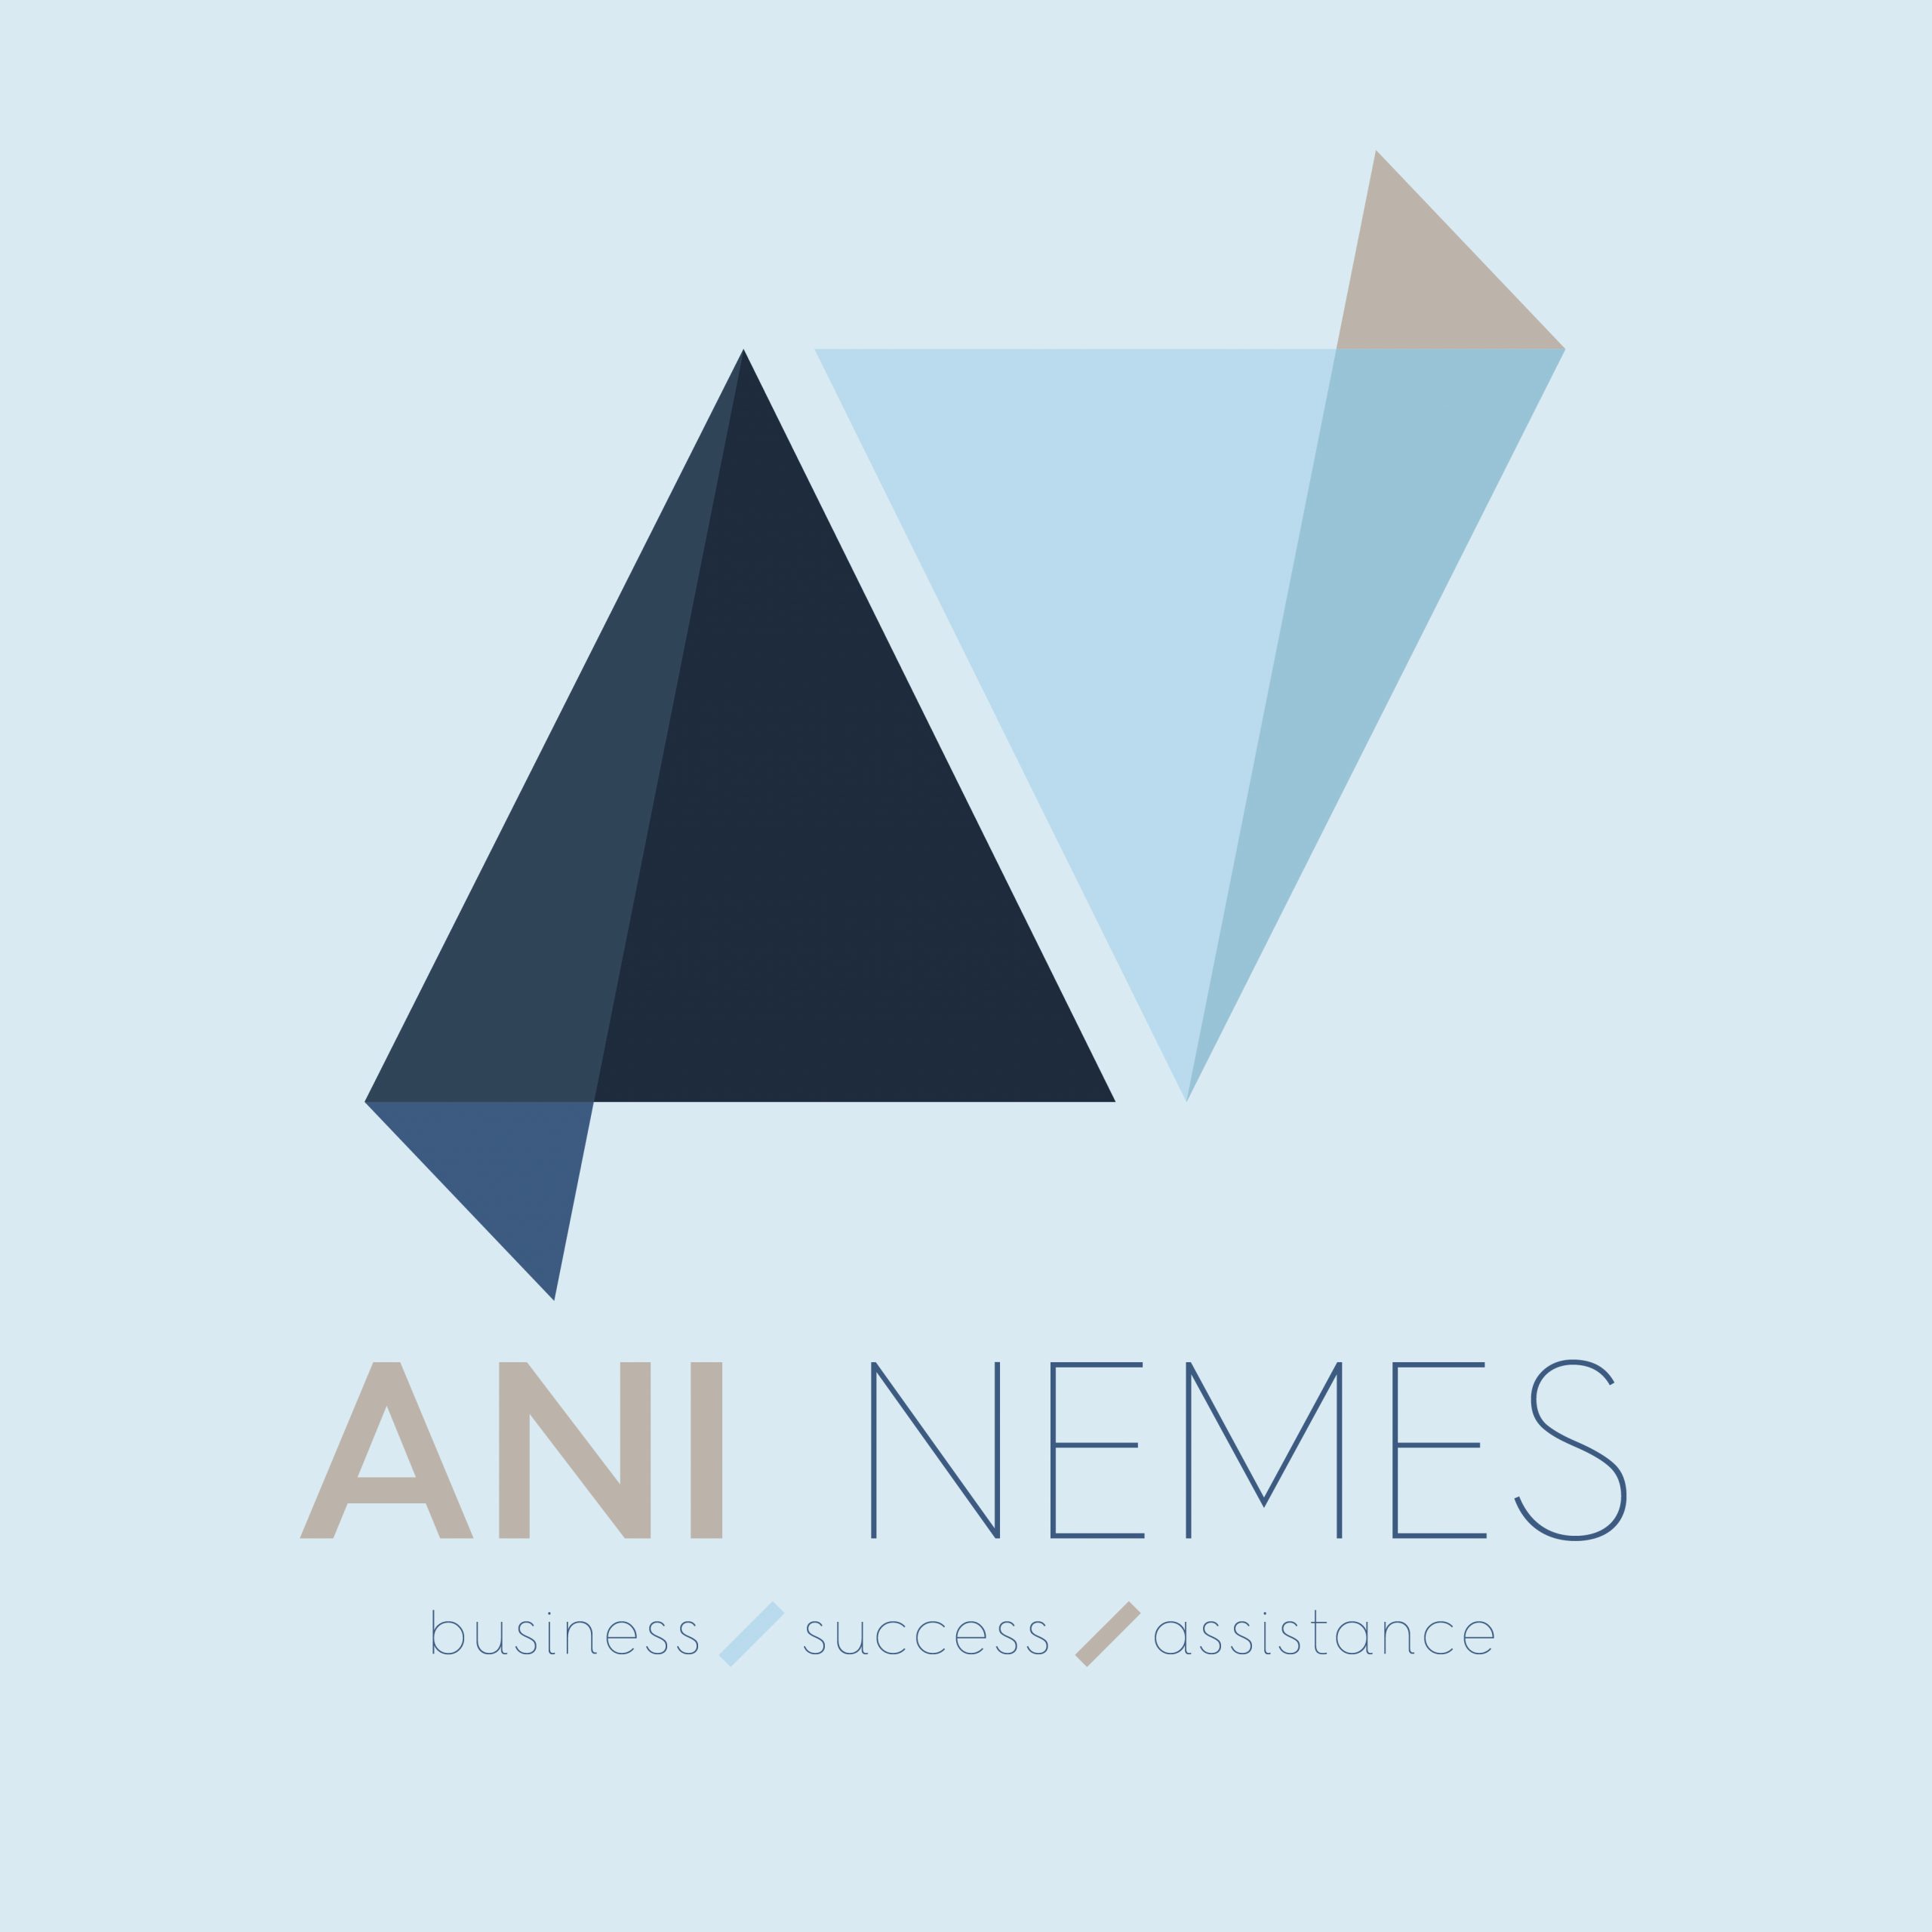 ANI_NEMES_logo_square_pic